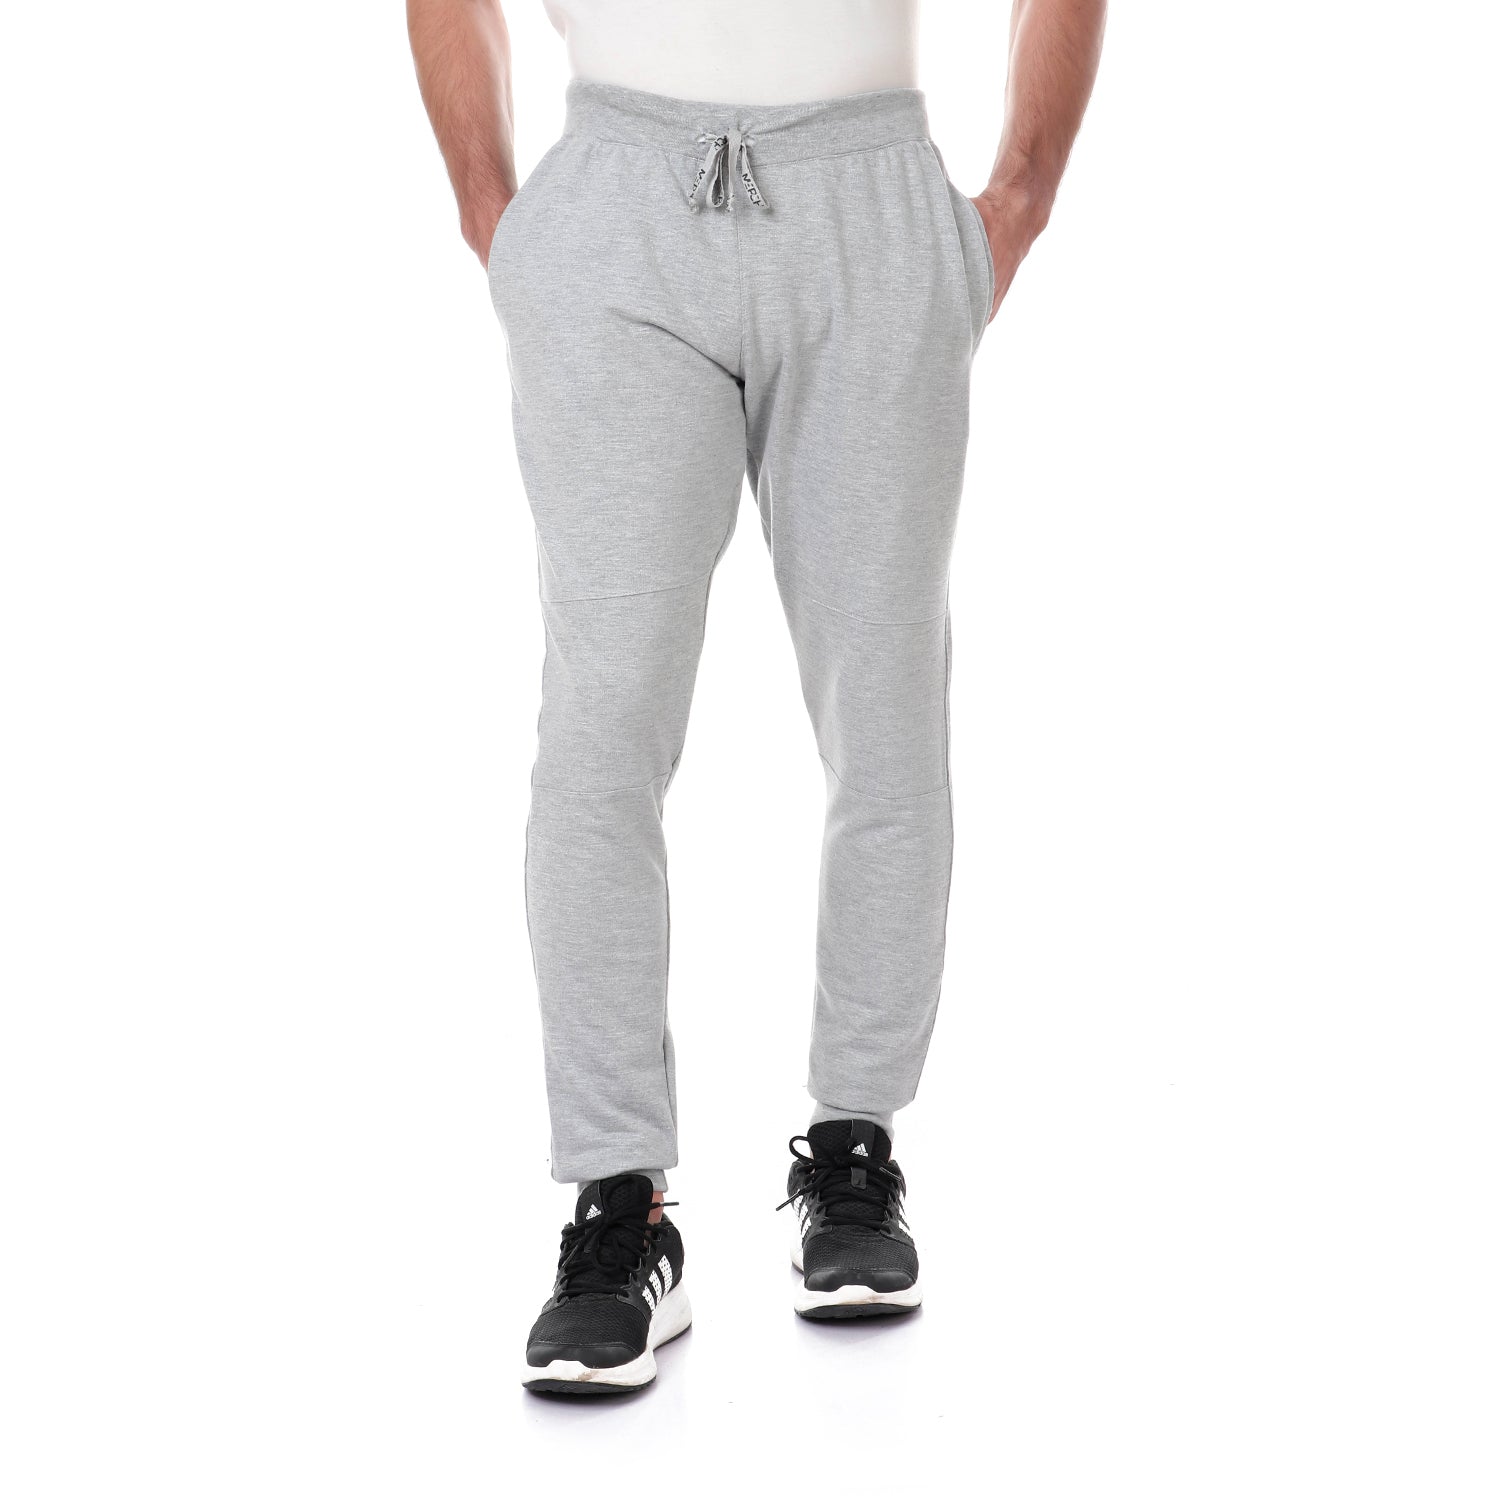 Basic Sweatpants For Men -110503001